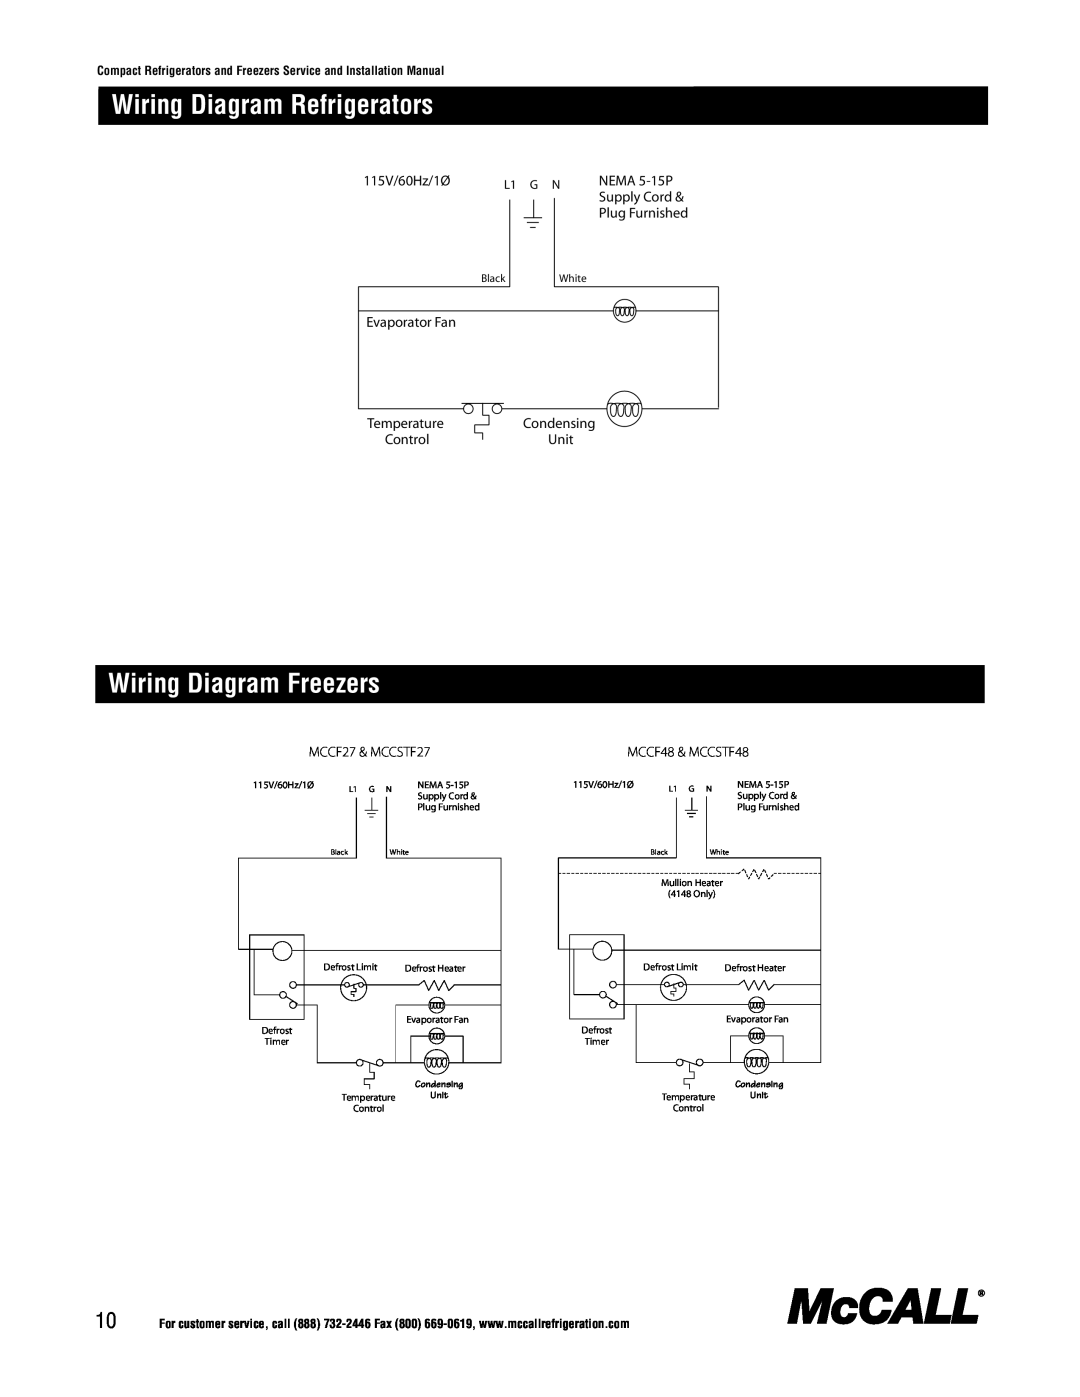 McCall Refrigeration MCCR48 manual Wiring Diagram Refrigerators, Wiring Diagram Freezers, 115V/60Hz/1Ø, NEMA 5-15P, L1 G N 